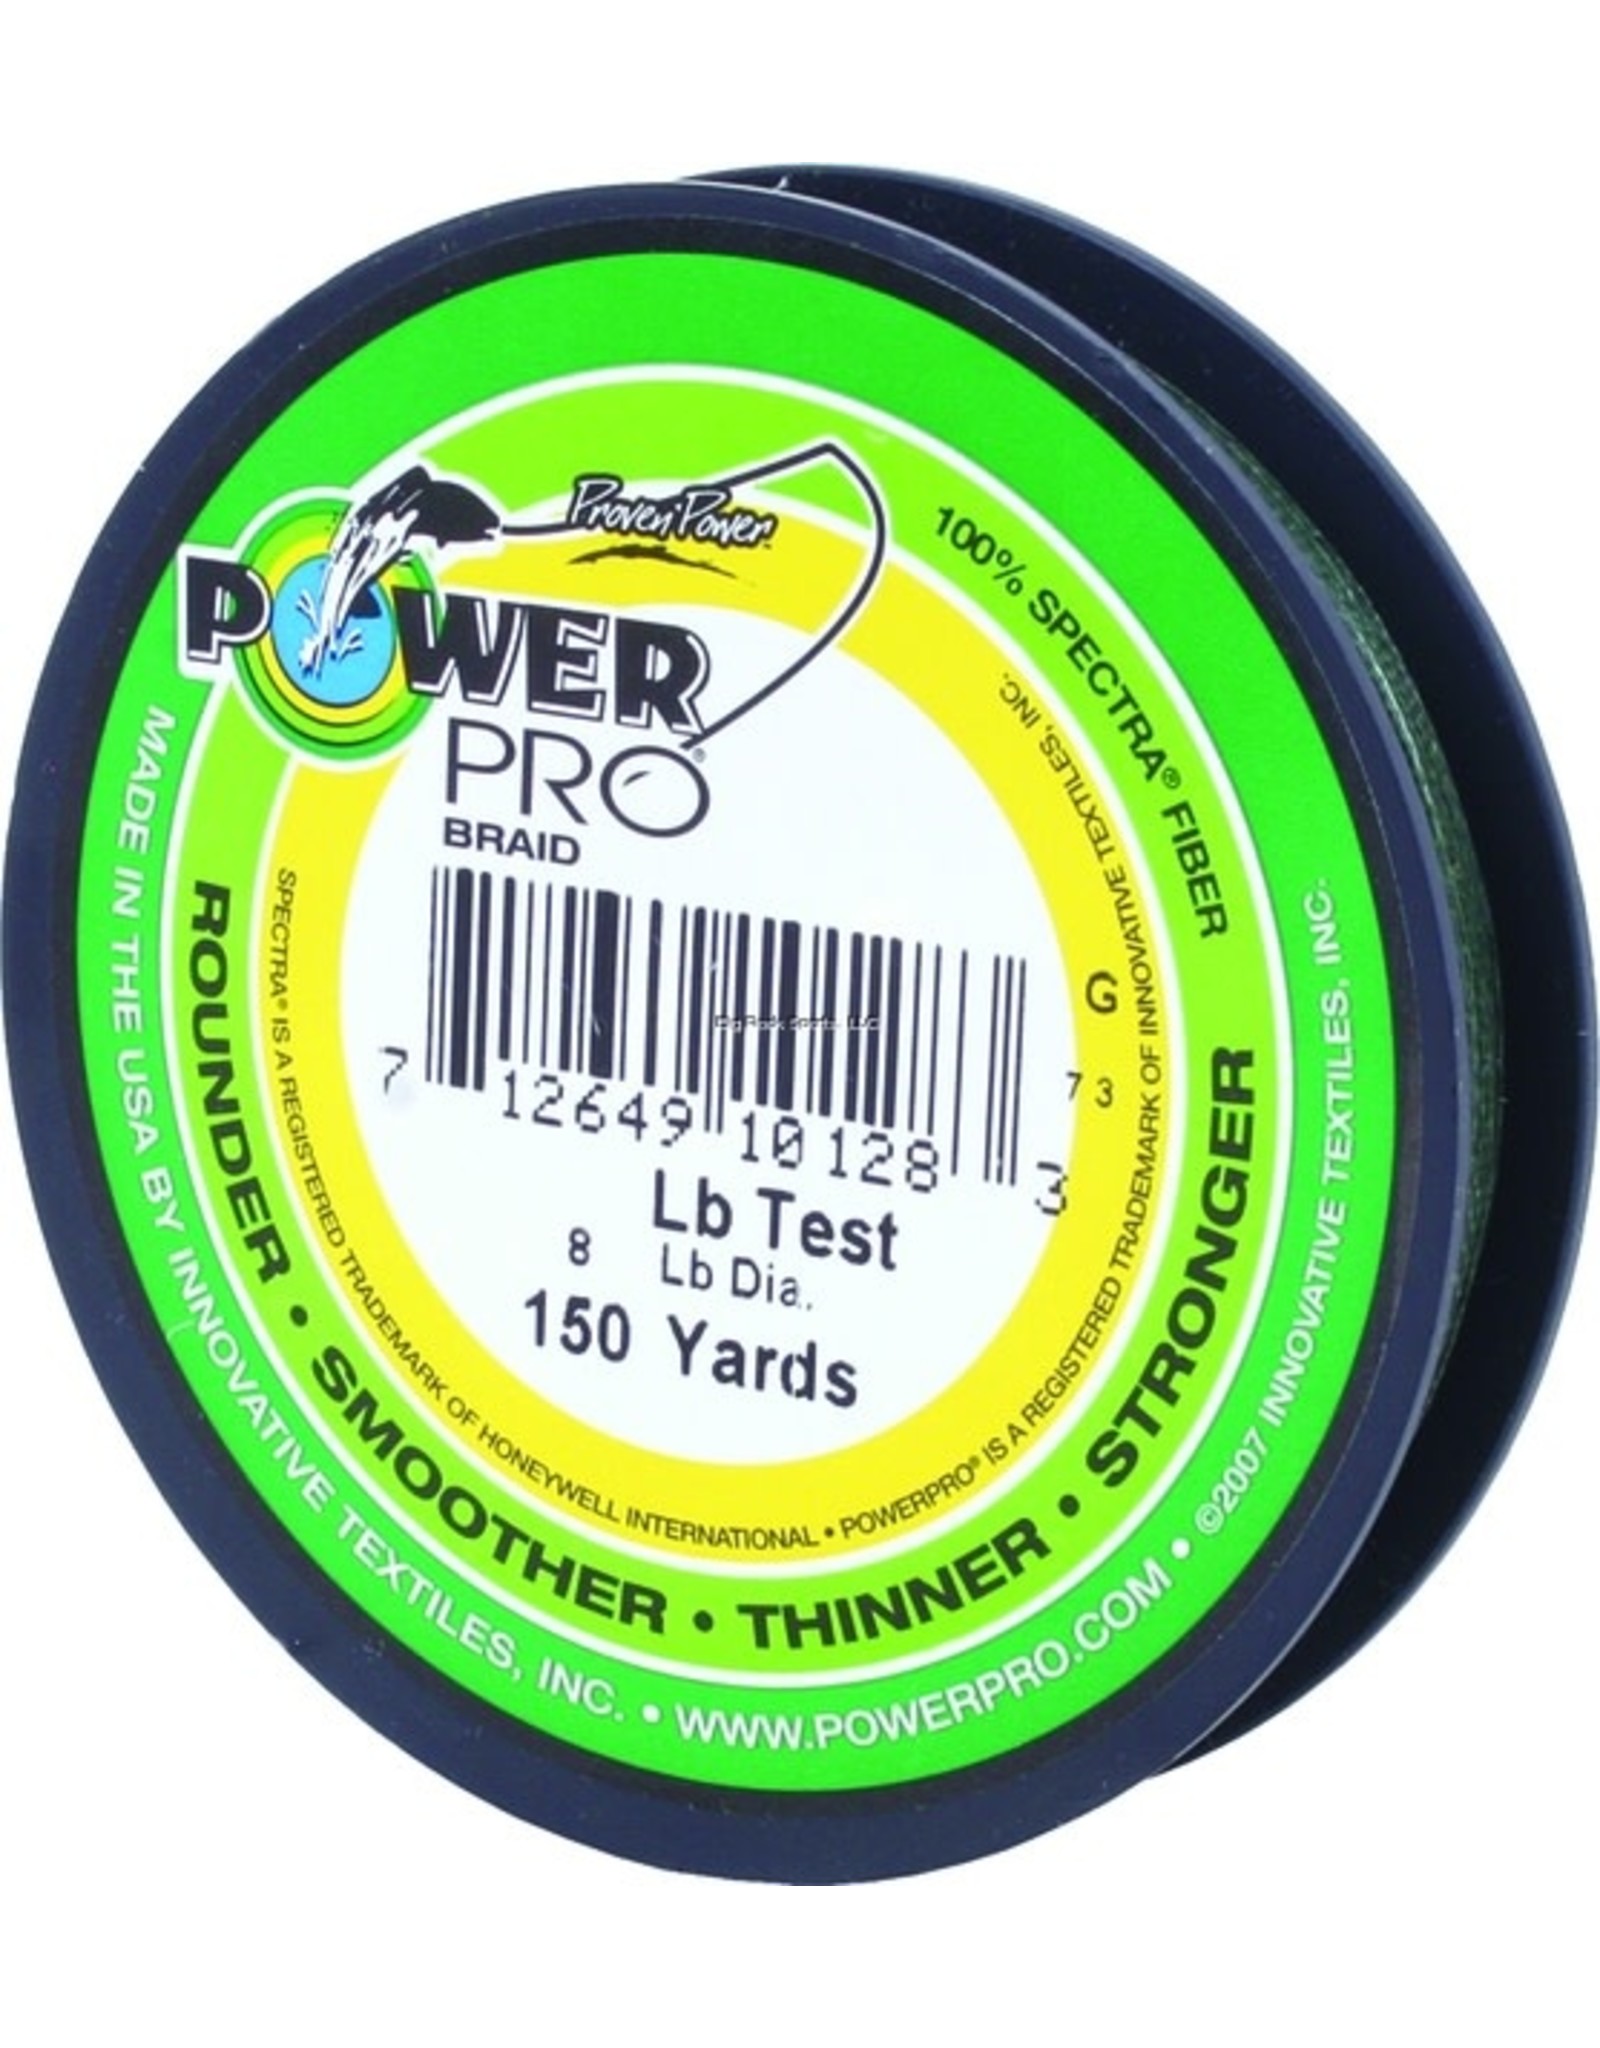 Power Pro Power Pro Braided Line Moss Green 150 yds. - 50 lb. Test